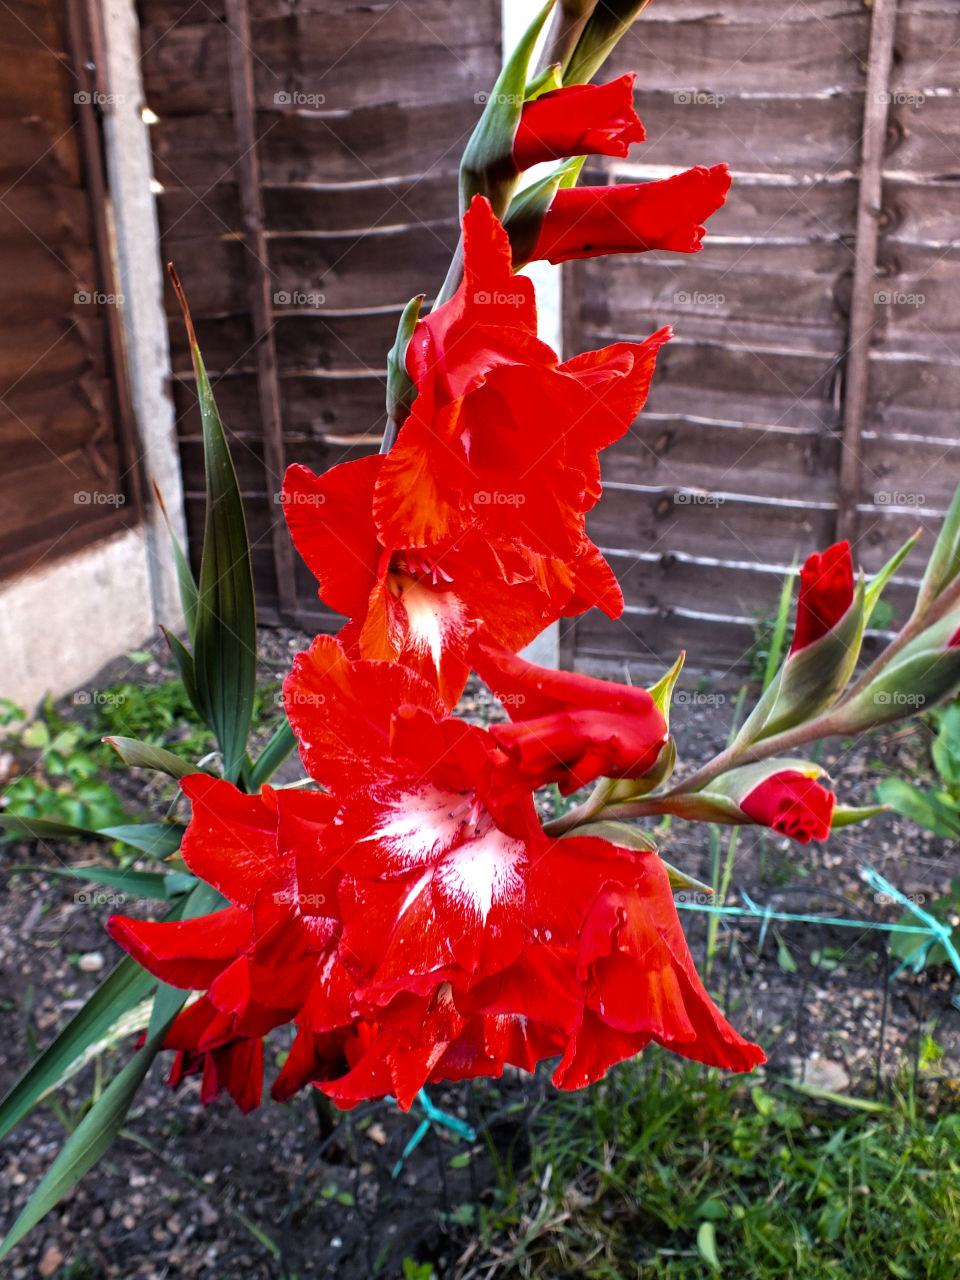 Garden life gladiolus